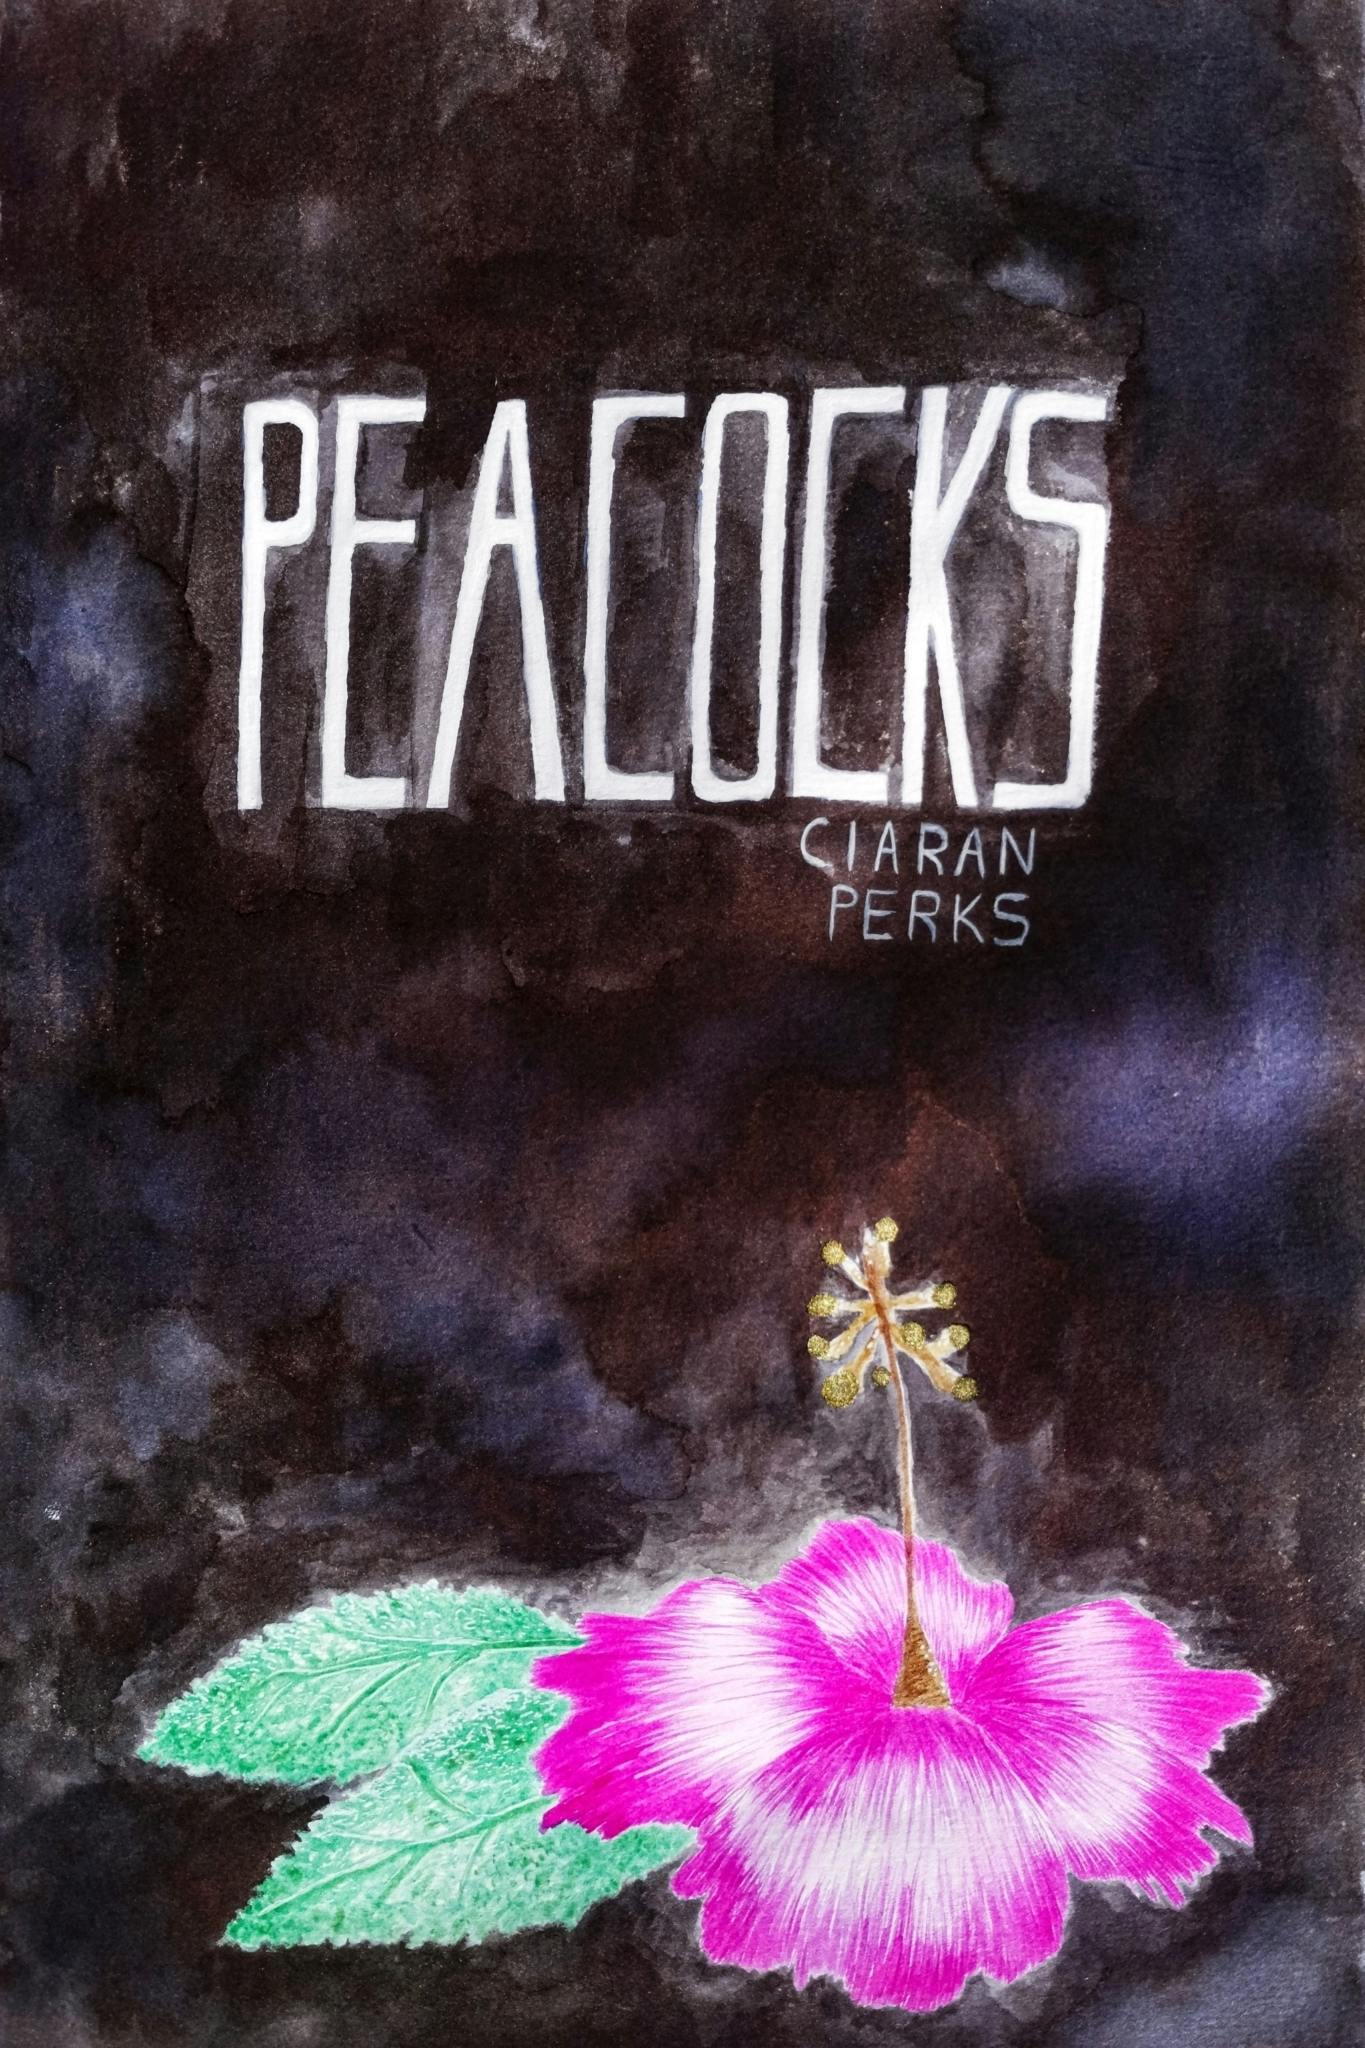 Peacocks Illusory Poems